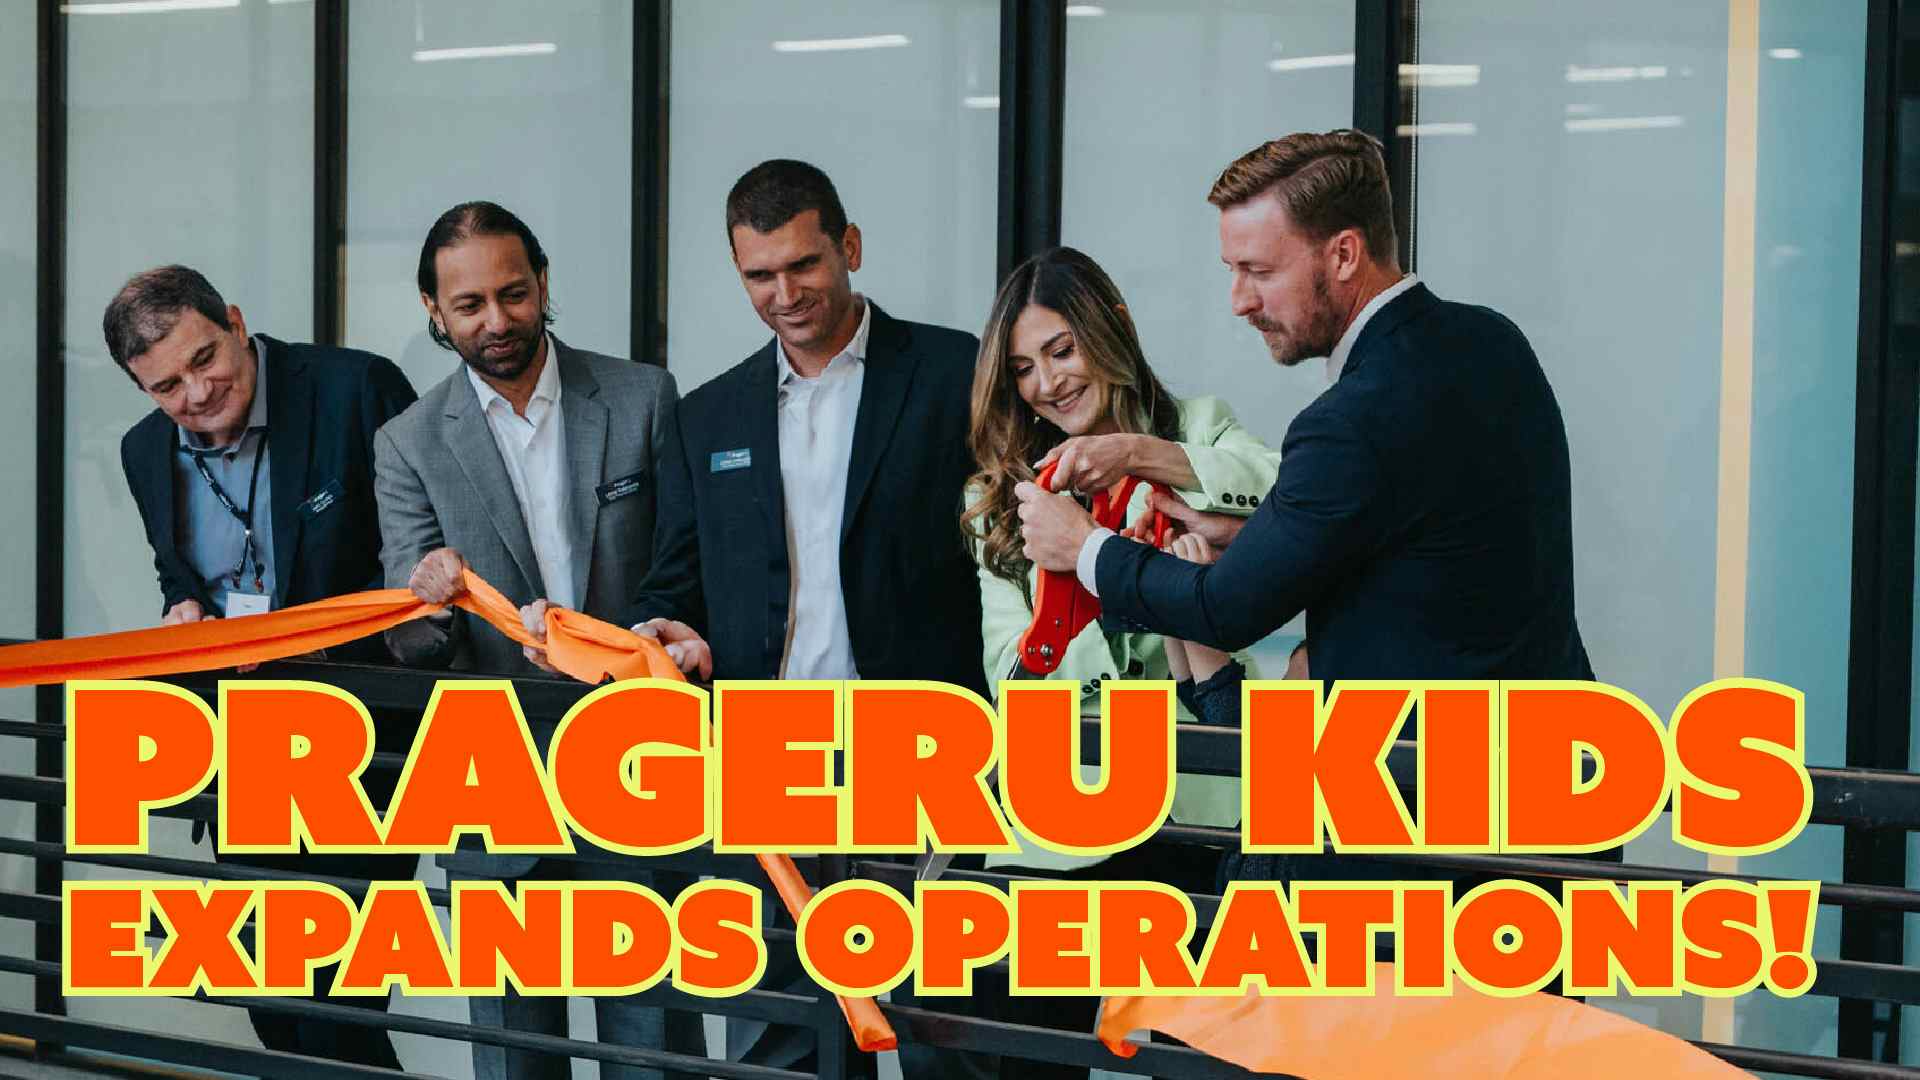 PragerU Kids Expands Operations!